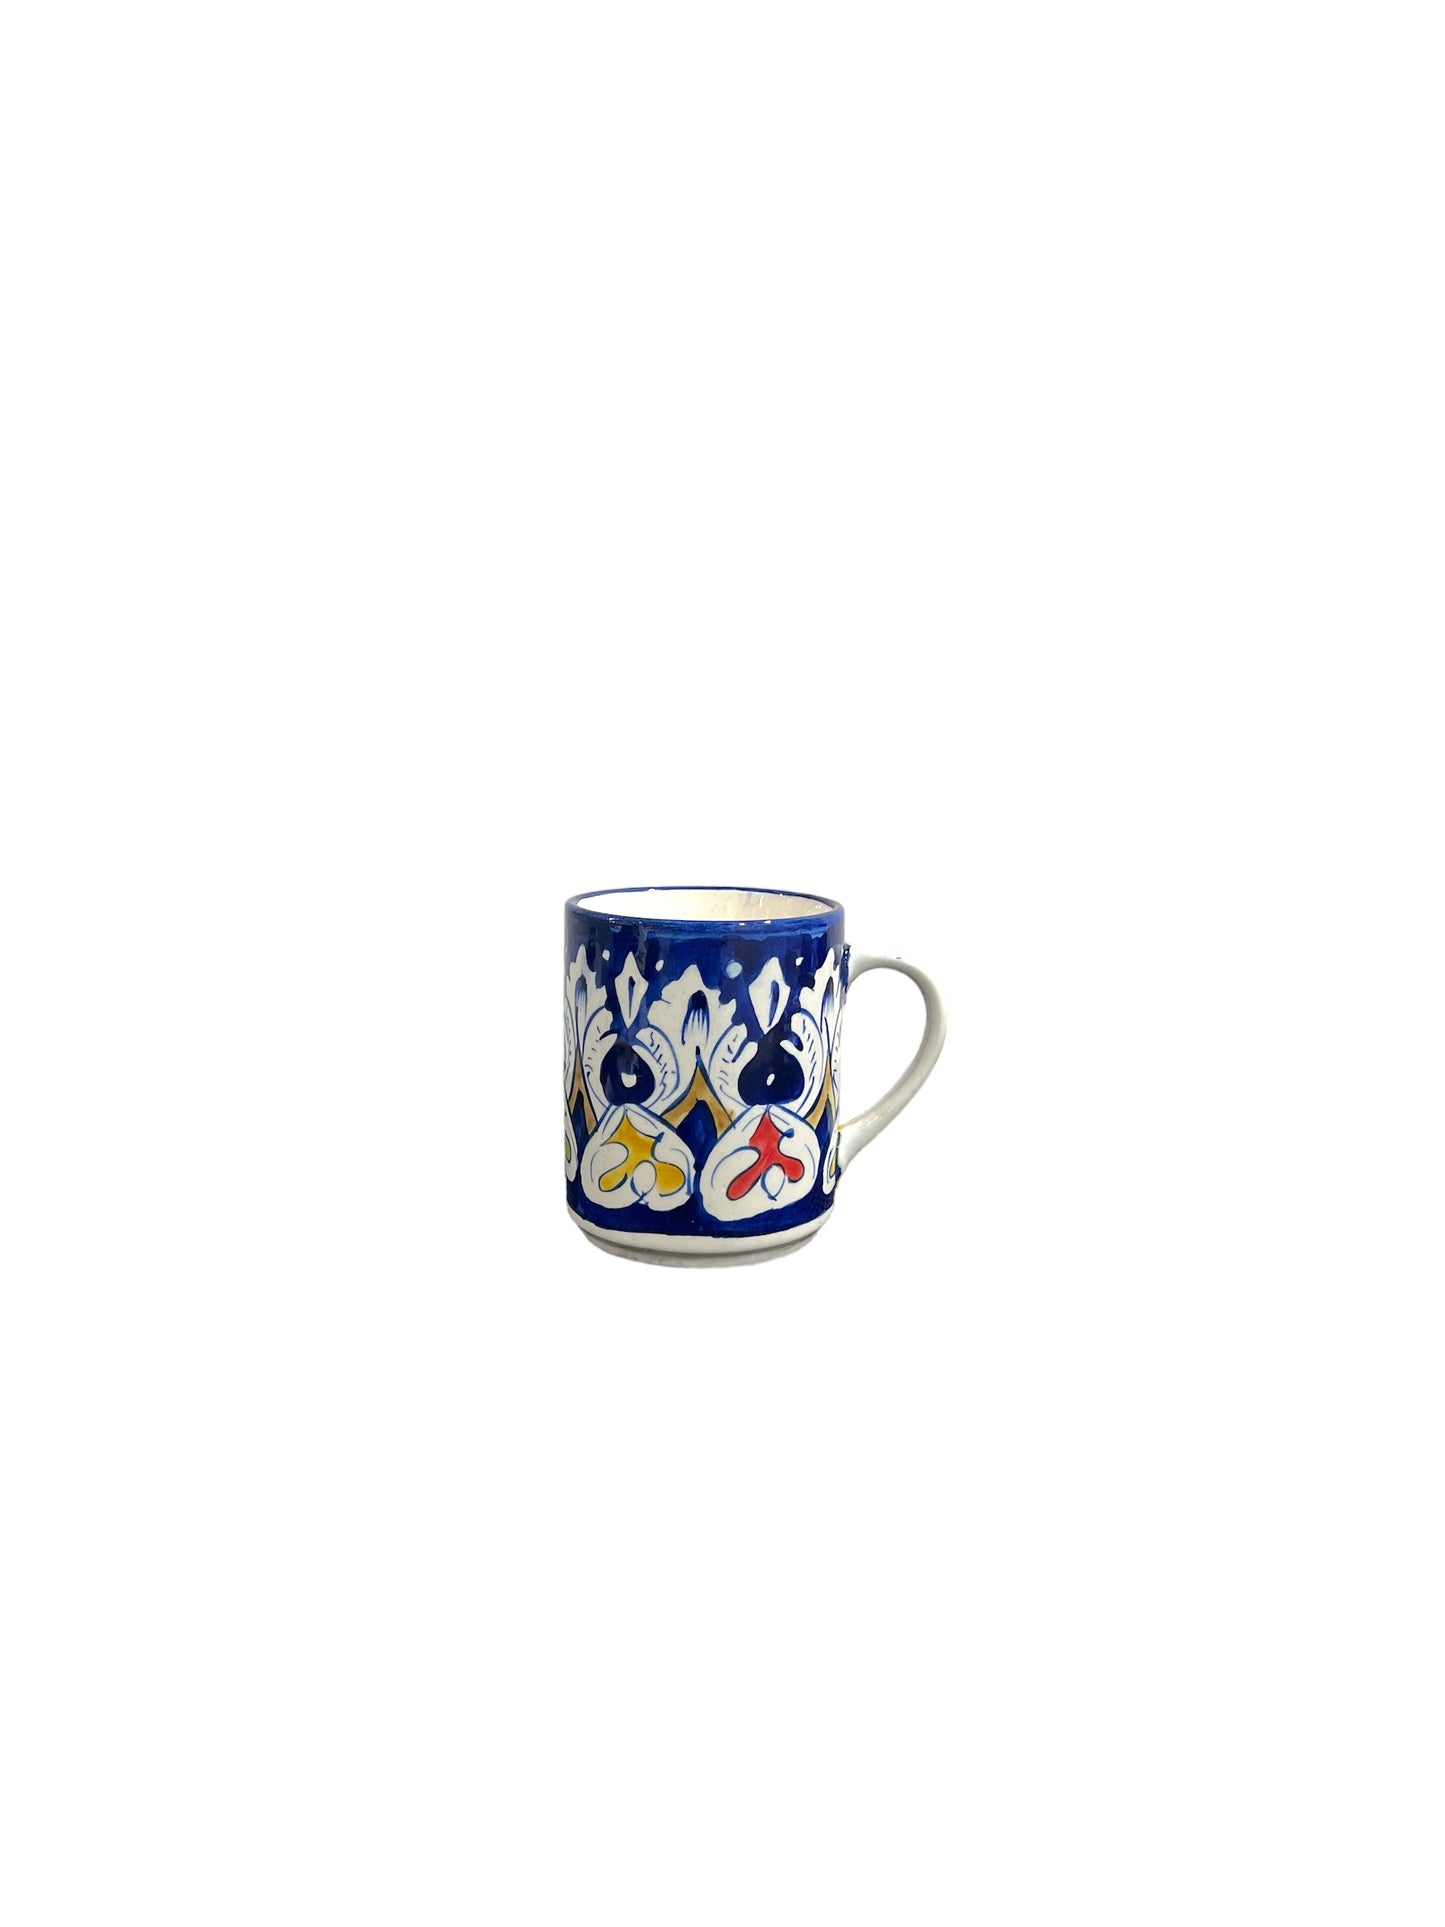 Blue Pottery Tea Coffee Mug - Multicoloured Holly Design (Set of 2)